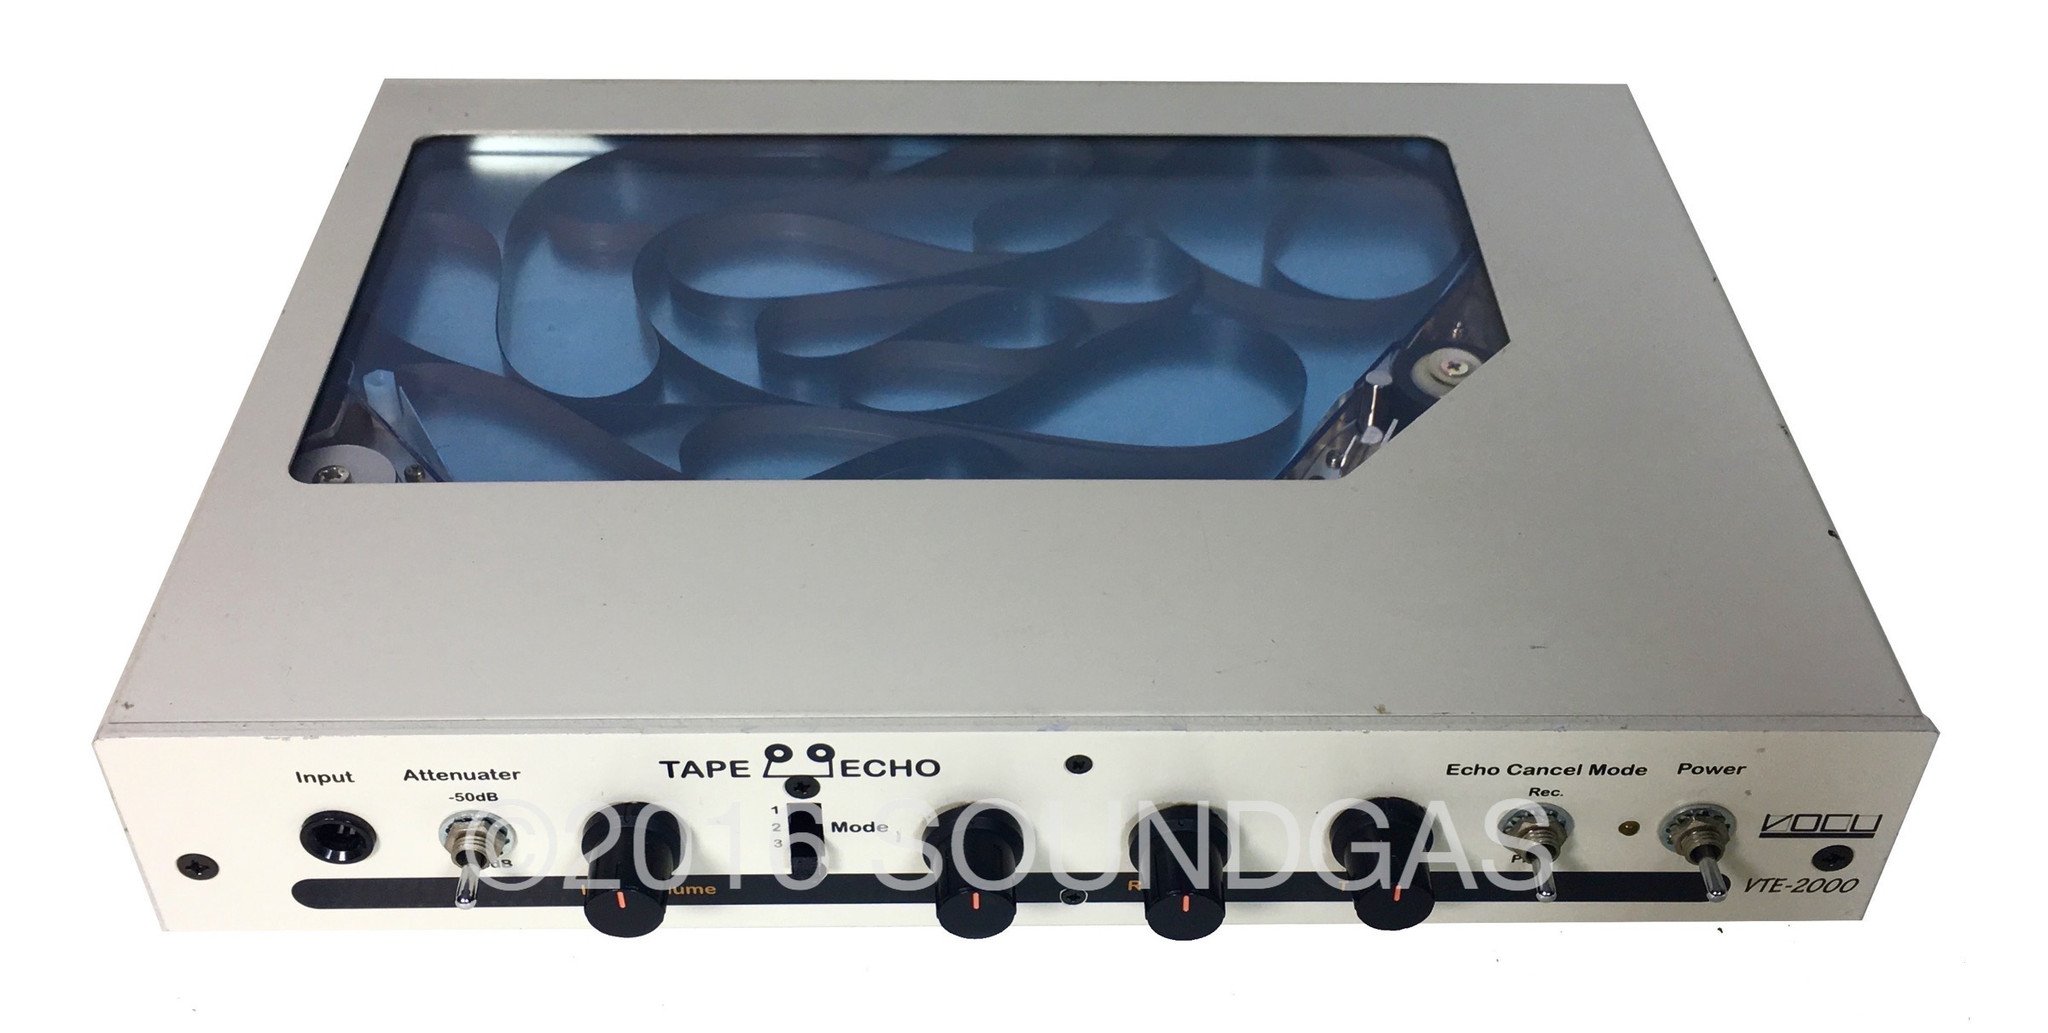 VOCU VTE-2000 (similar to Hiwatt) Tape Echo Effect Unit FOR SALE